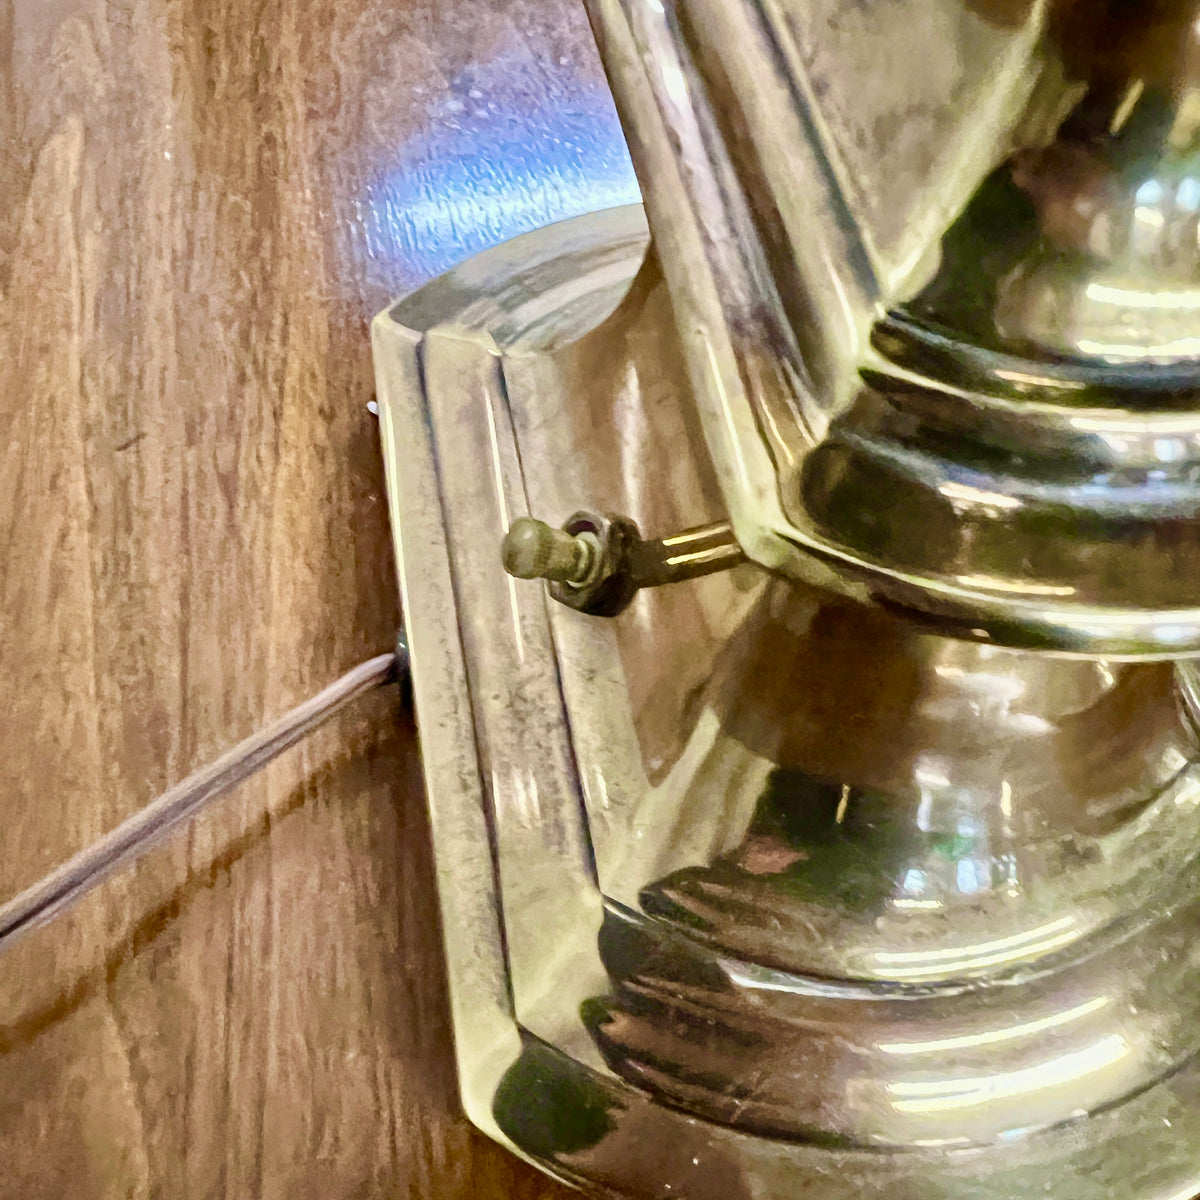 Lovely Stiffel brass lamp.  Timeless style.  Working..  Hollywood regency, Chicago, IL Studio Sonja Milan